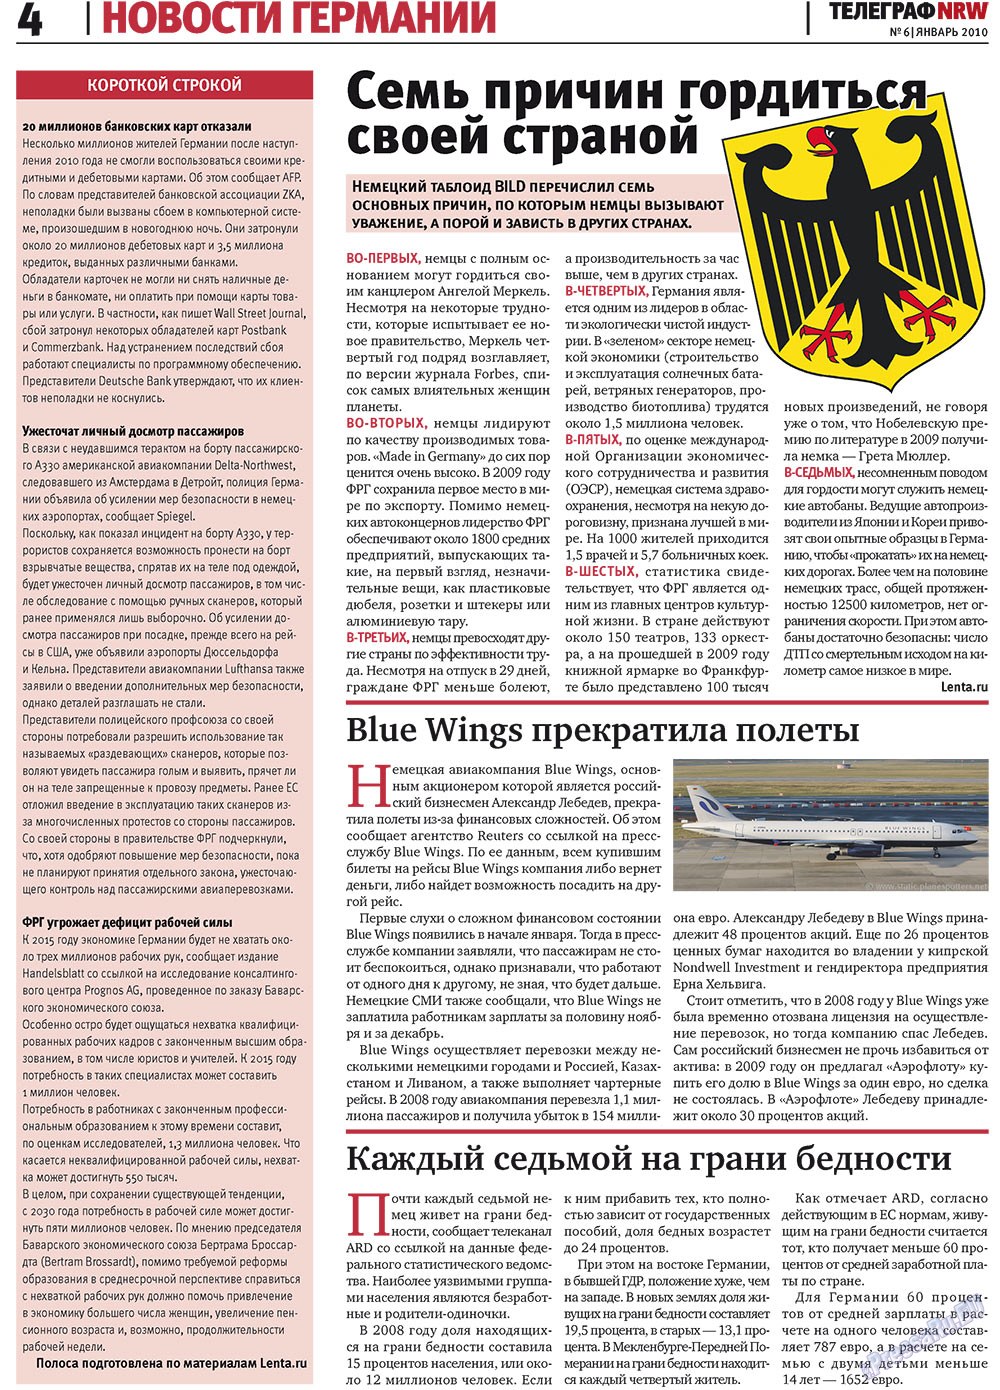 Телеграф NRW, газета. 2010 №1 стр.4